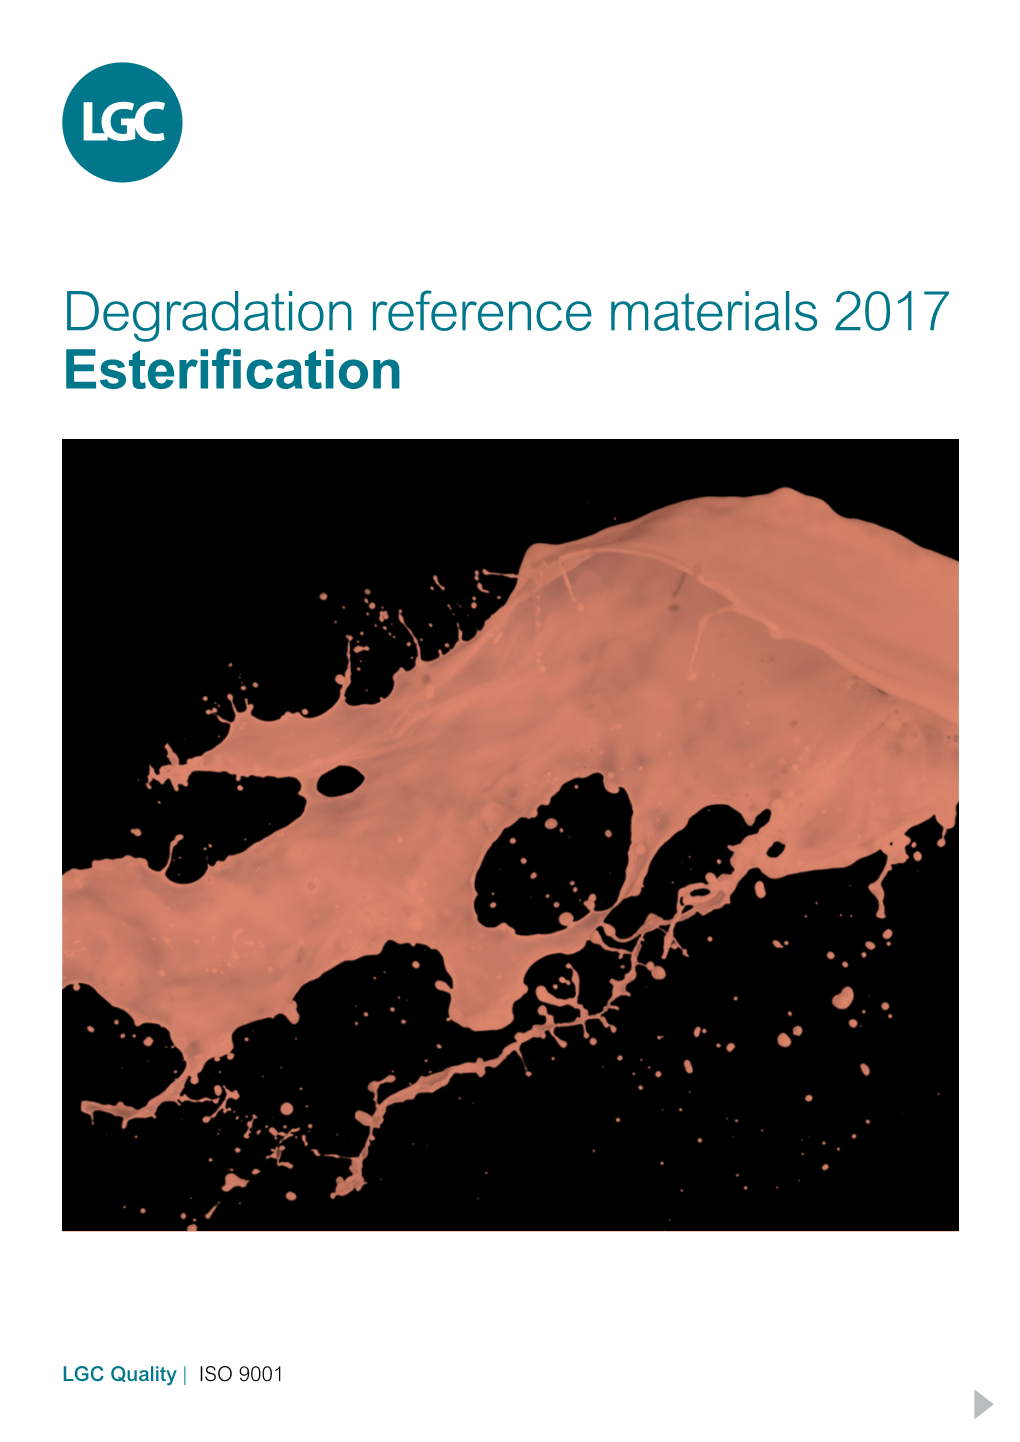 Degradation Reference Materials 2017 Esterification